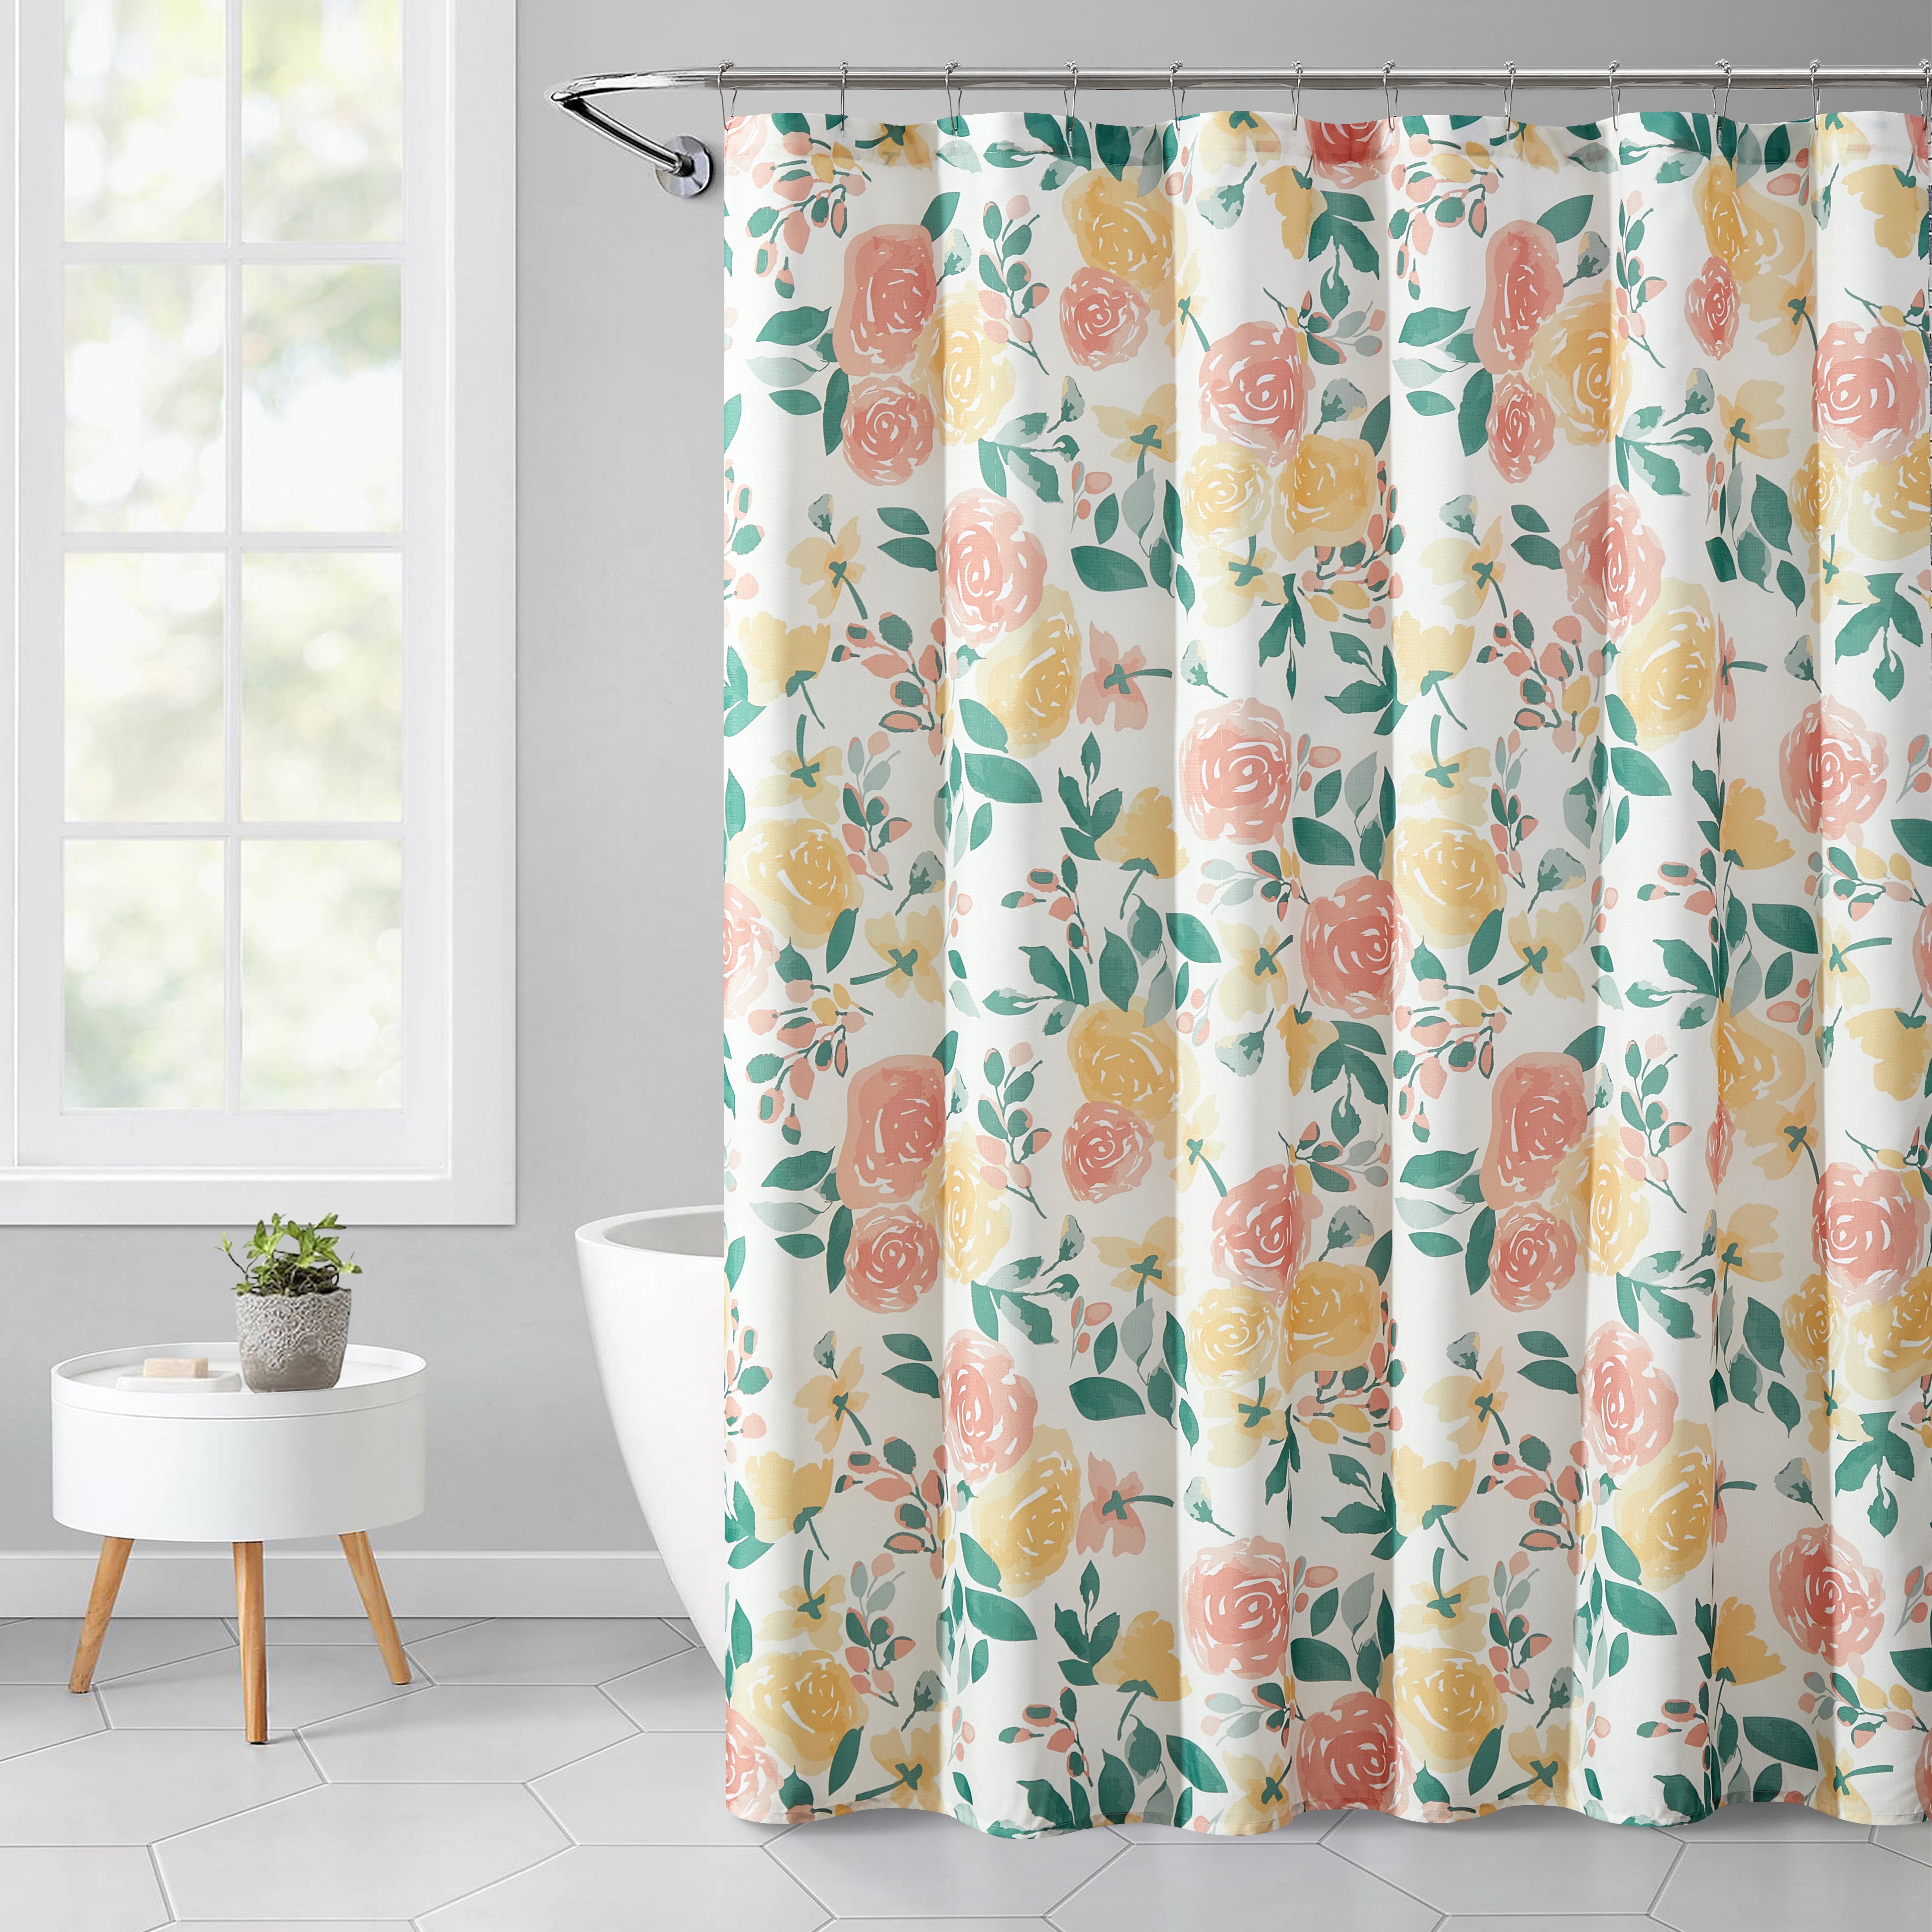 Baseball and wood Waterproof Polyester Fabric Shower Curtain & 12 Hooks 72*72'' 